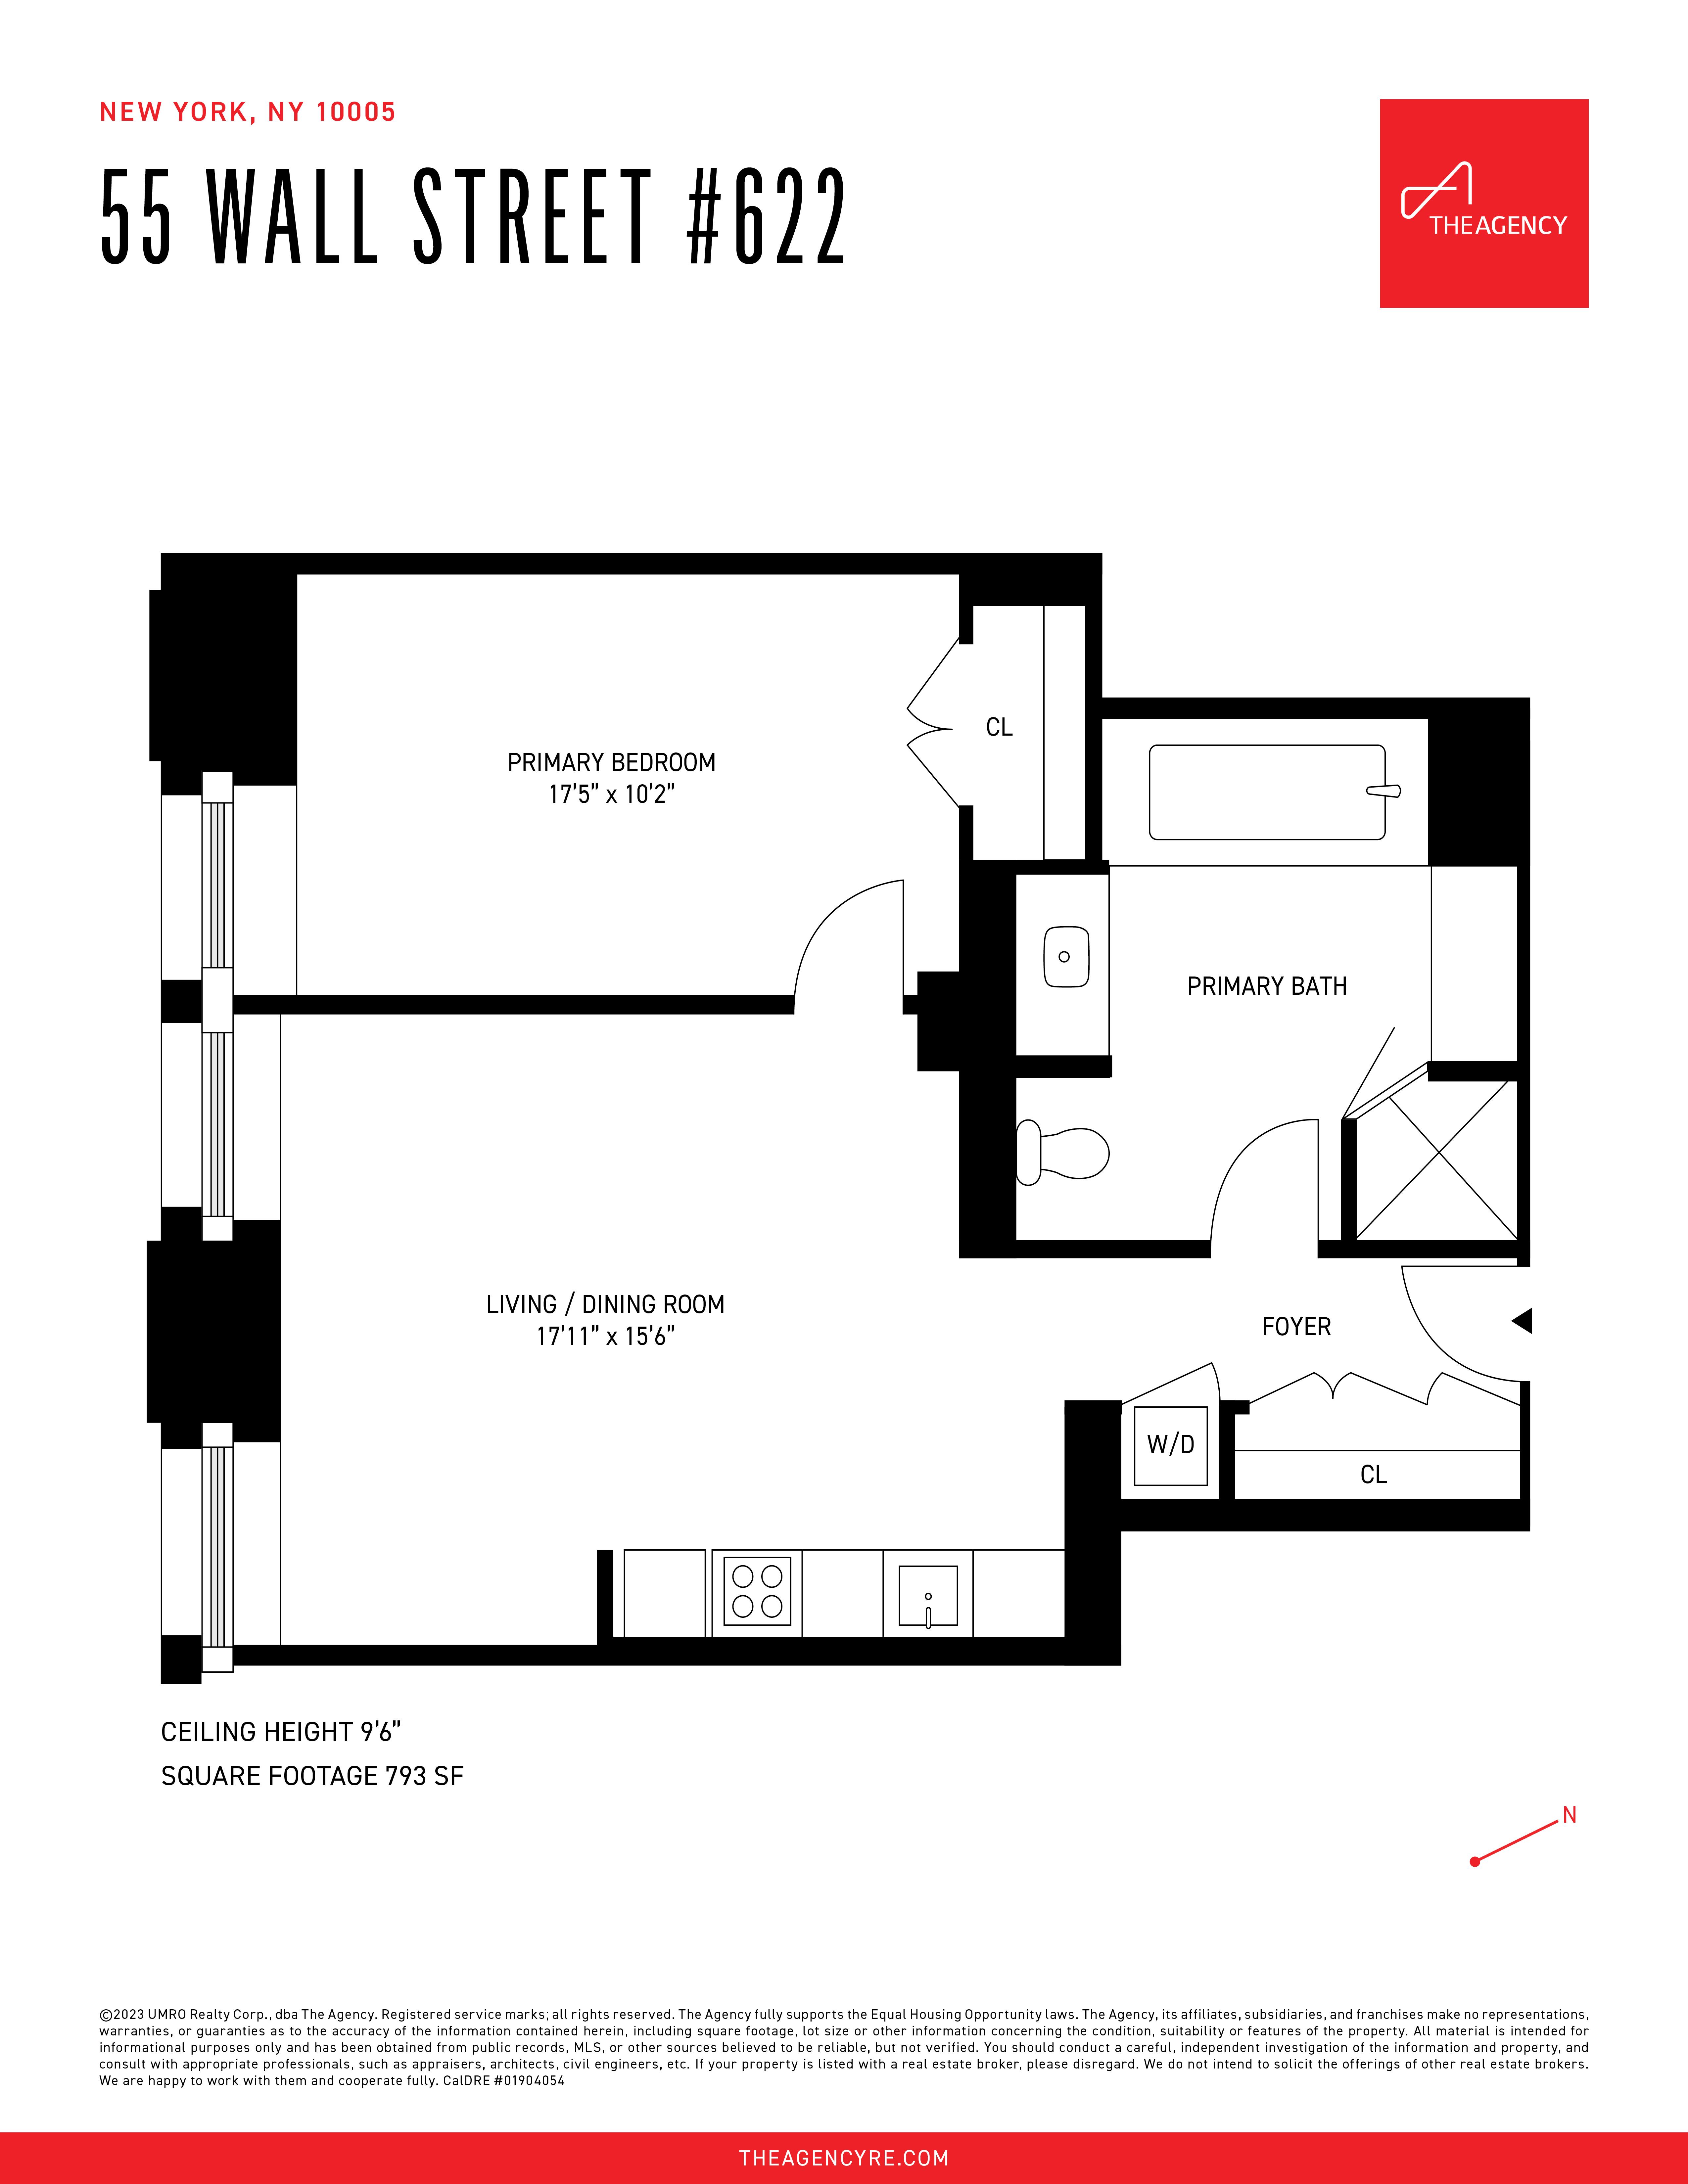 Floorplan for 55 Wall Street, 622